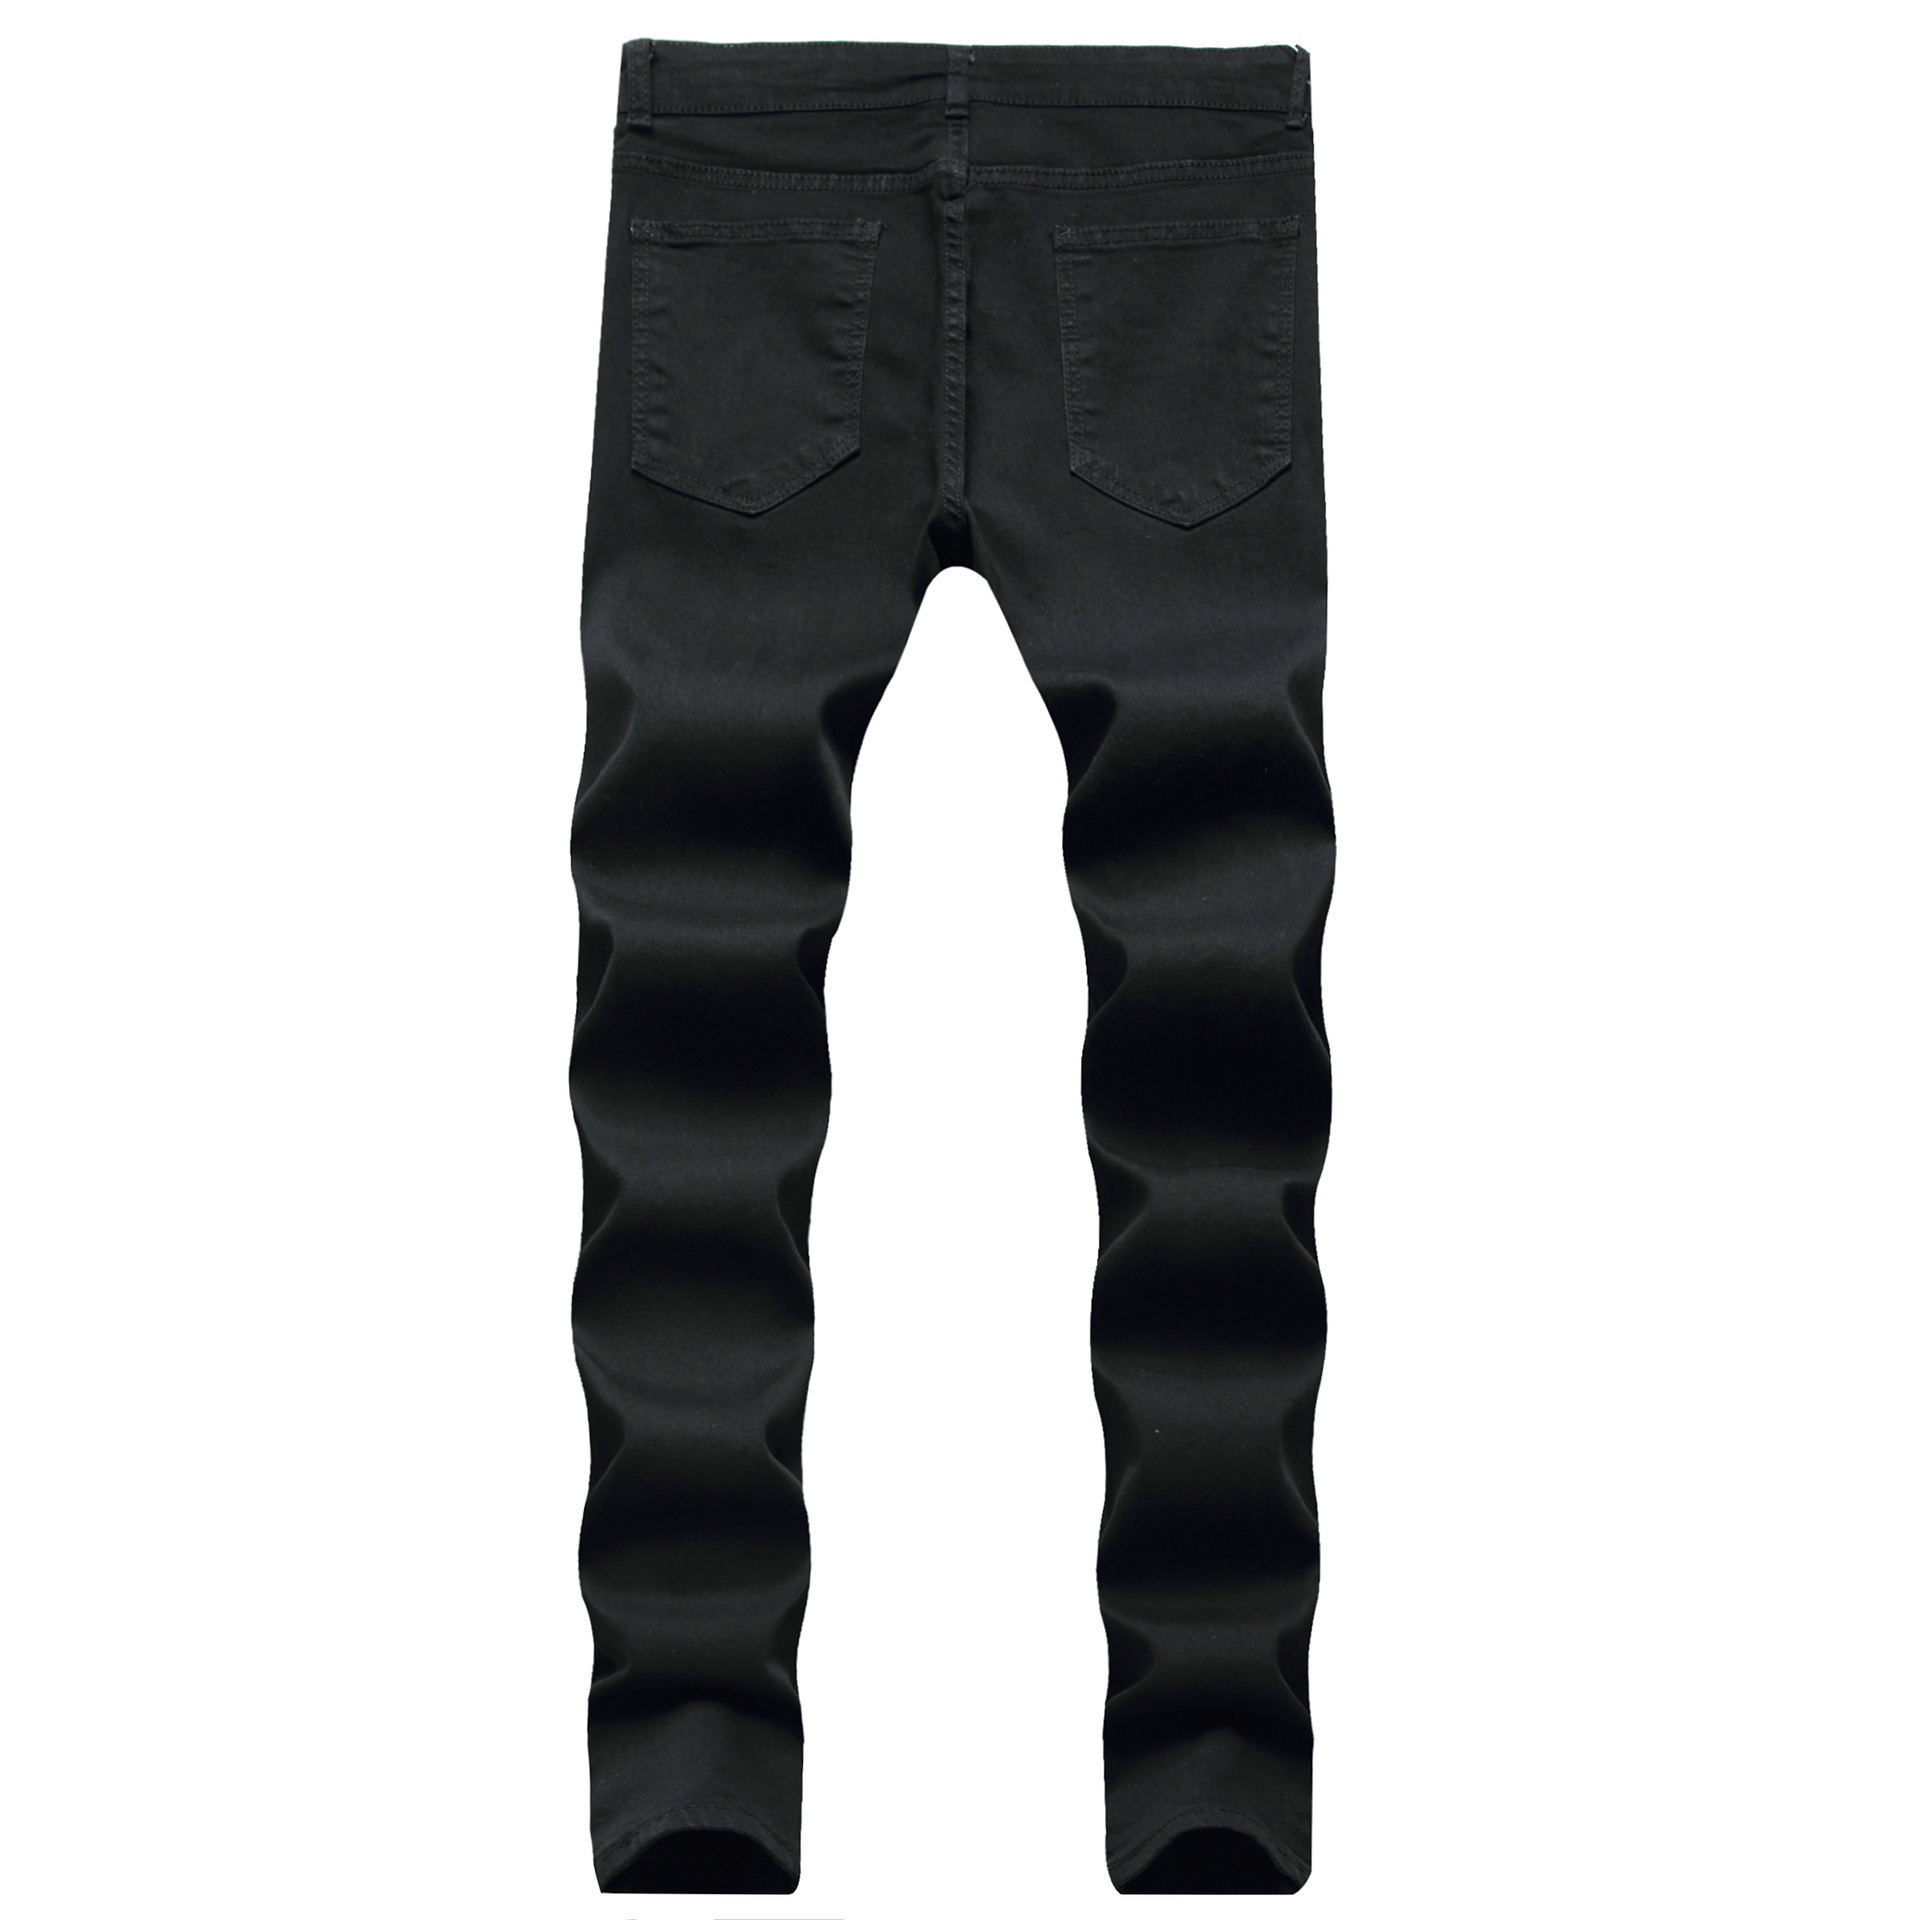 Men's Black Slim Fit Stretch Ripped Jeans